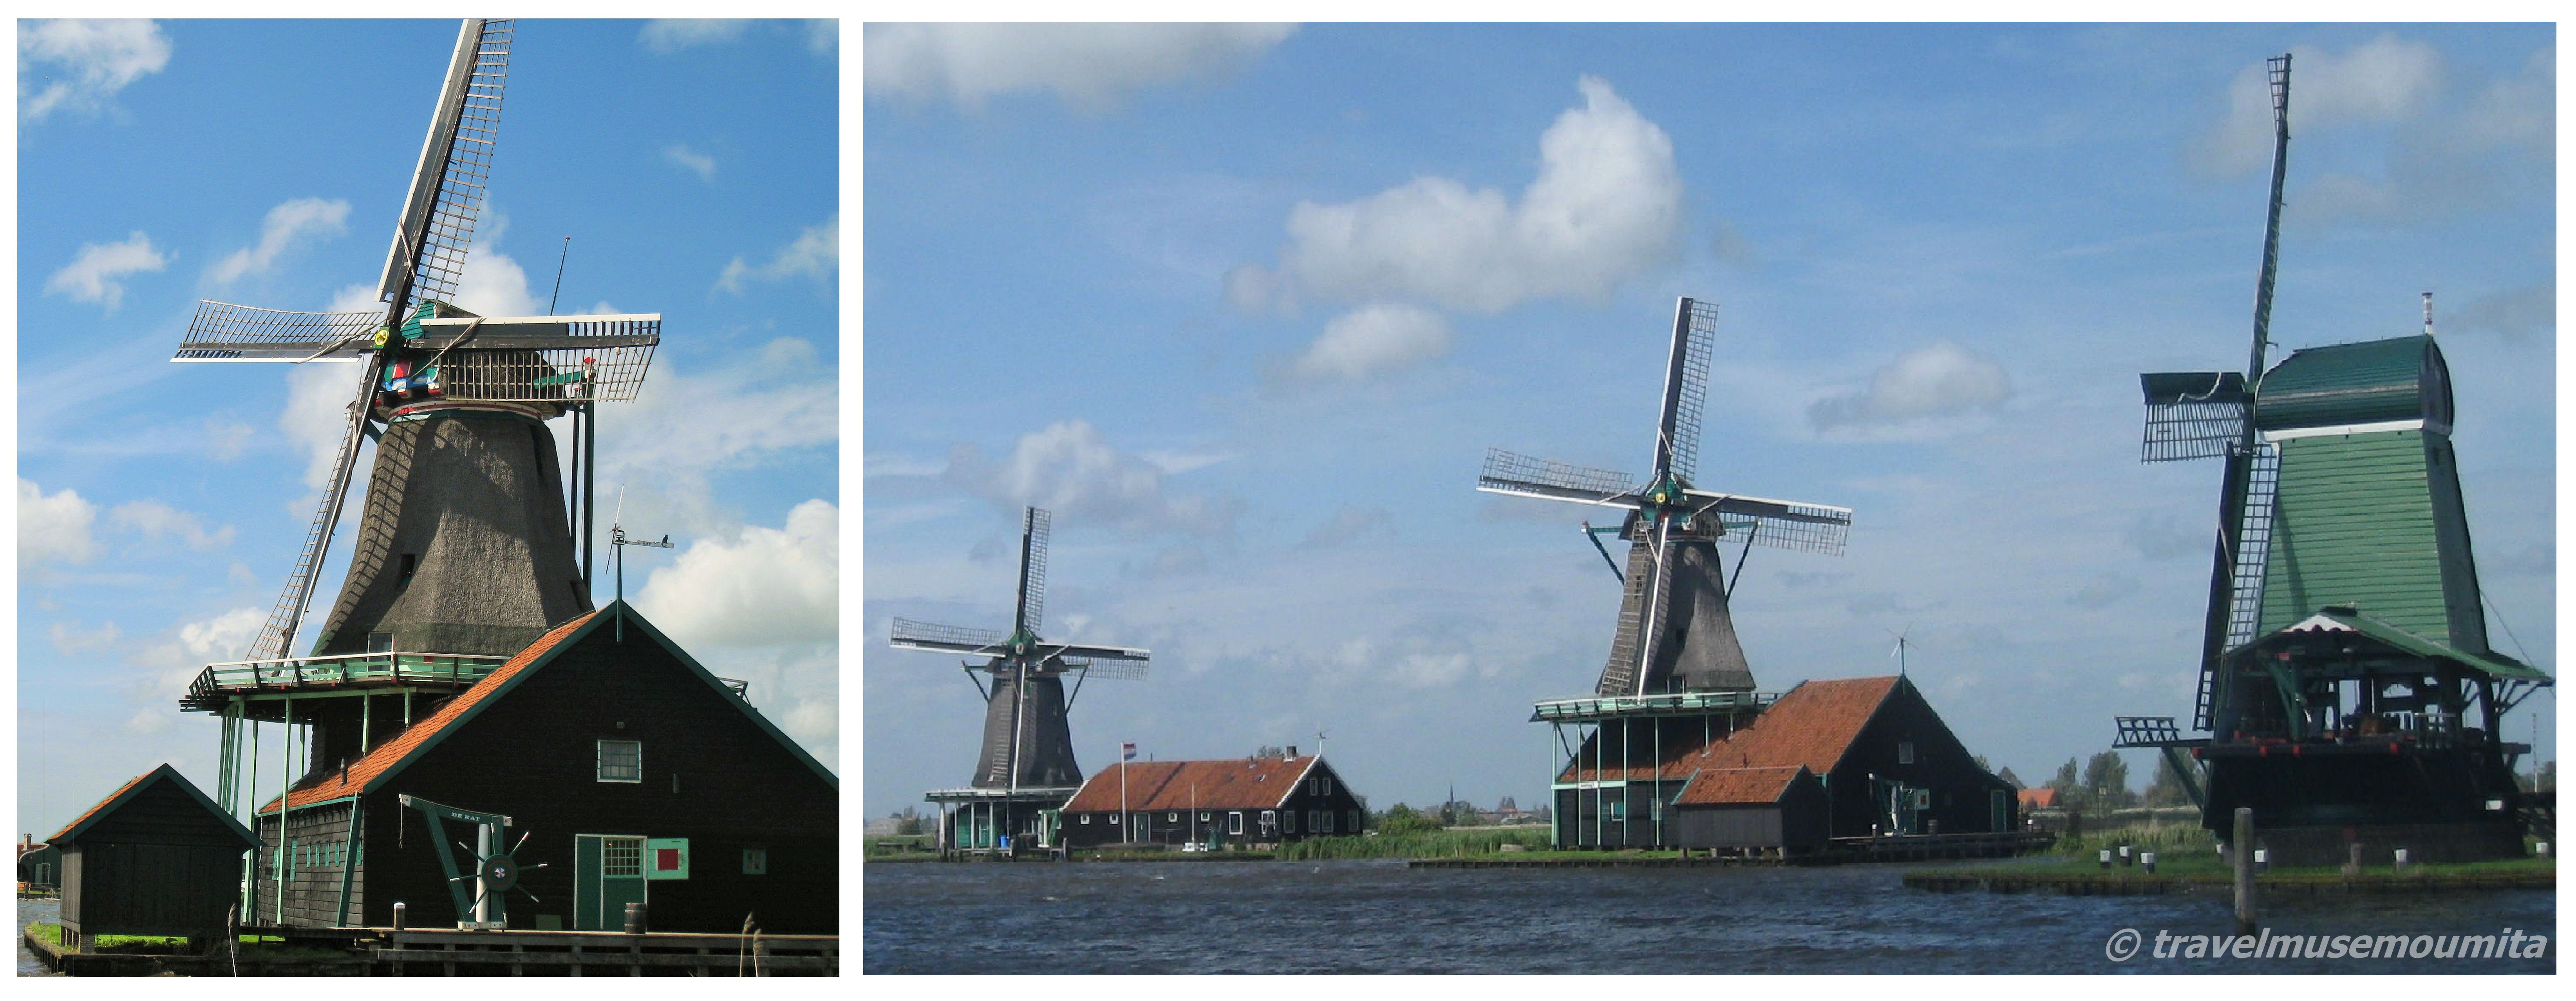 Zaanse Schans Windmill Village – Netherlands | Travel Muse Moumita